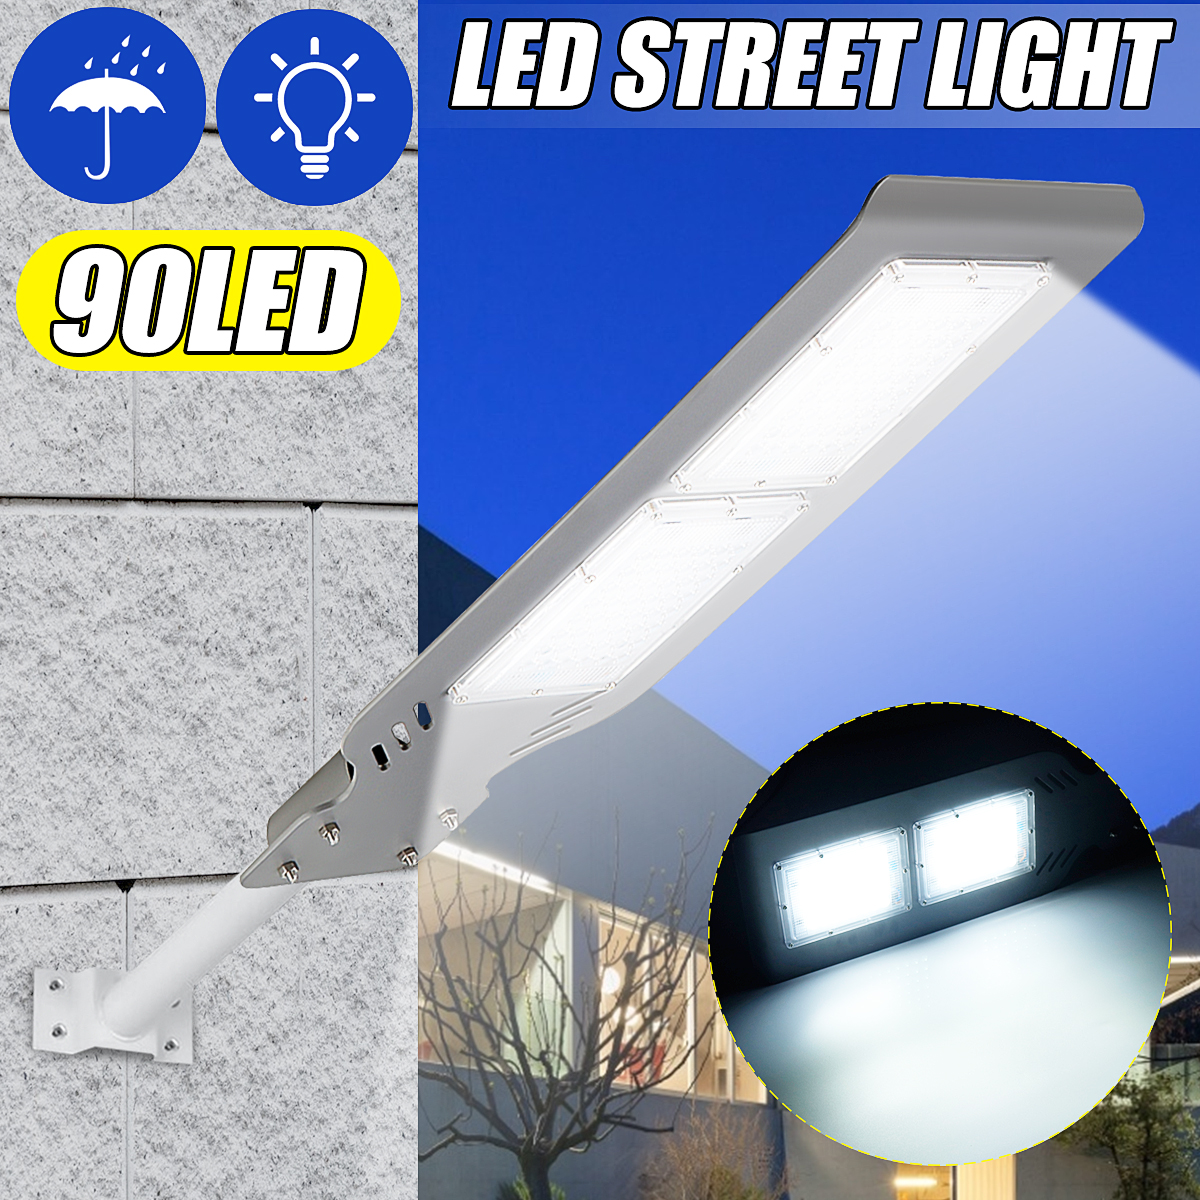 AUGIENB-100200W-96-LED-Powered-Wall-Street-Light-Outdoor-Garden-Lamp-140000LM-Wall-Light-1643246-2